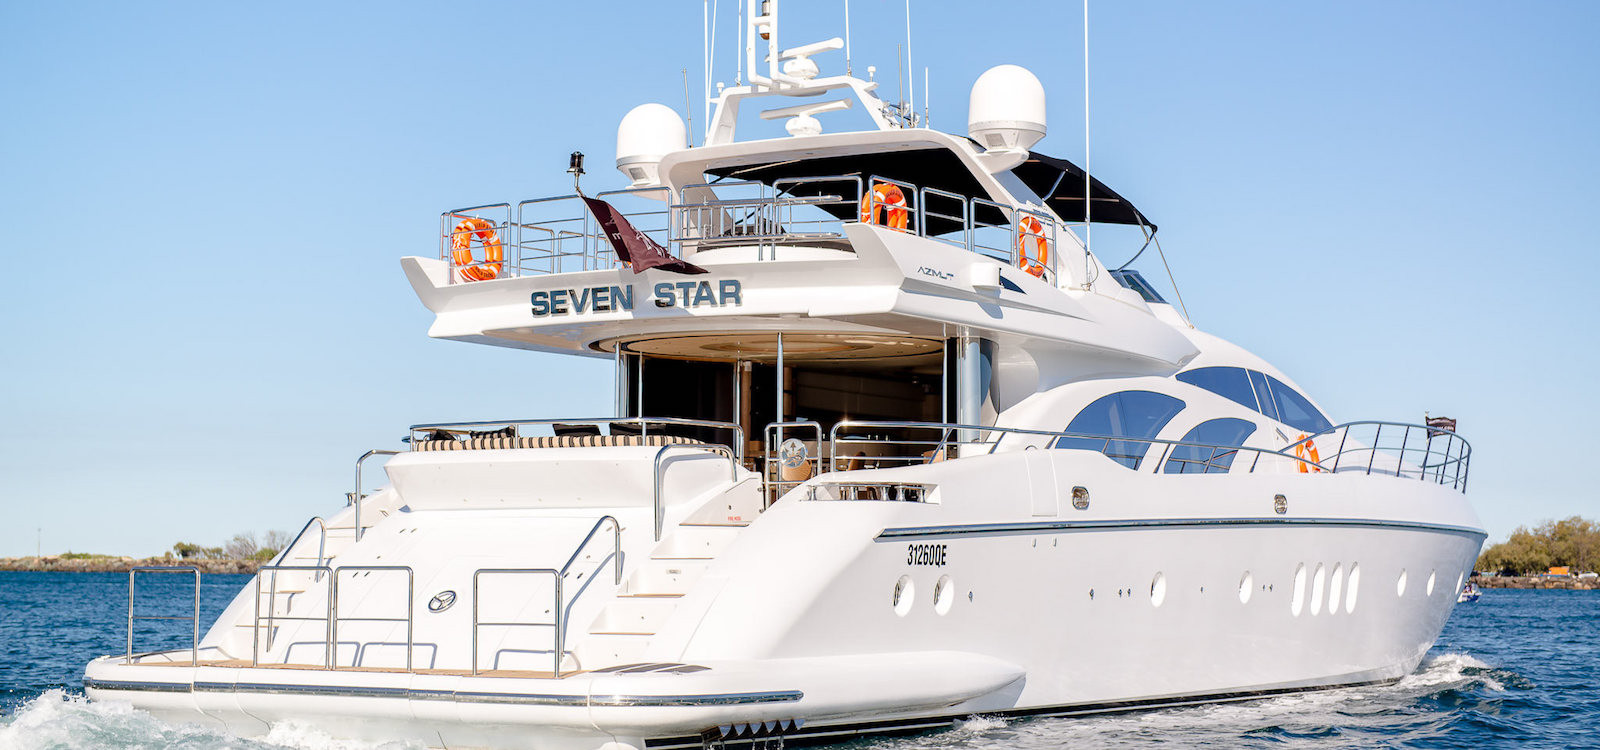 7 star yacht